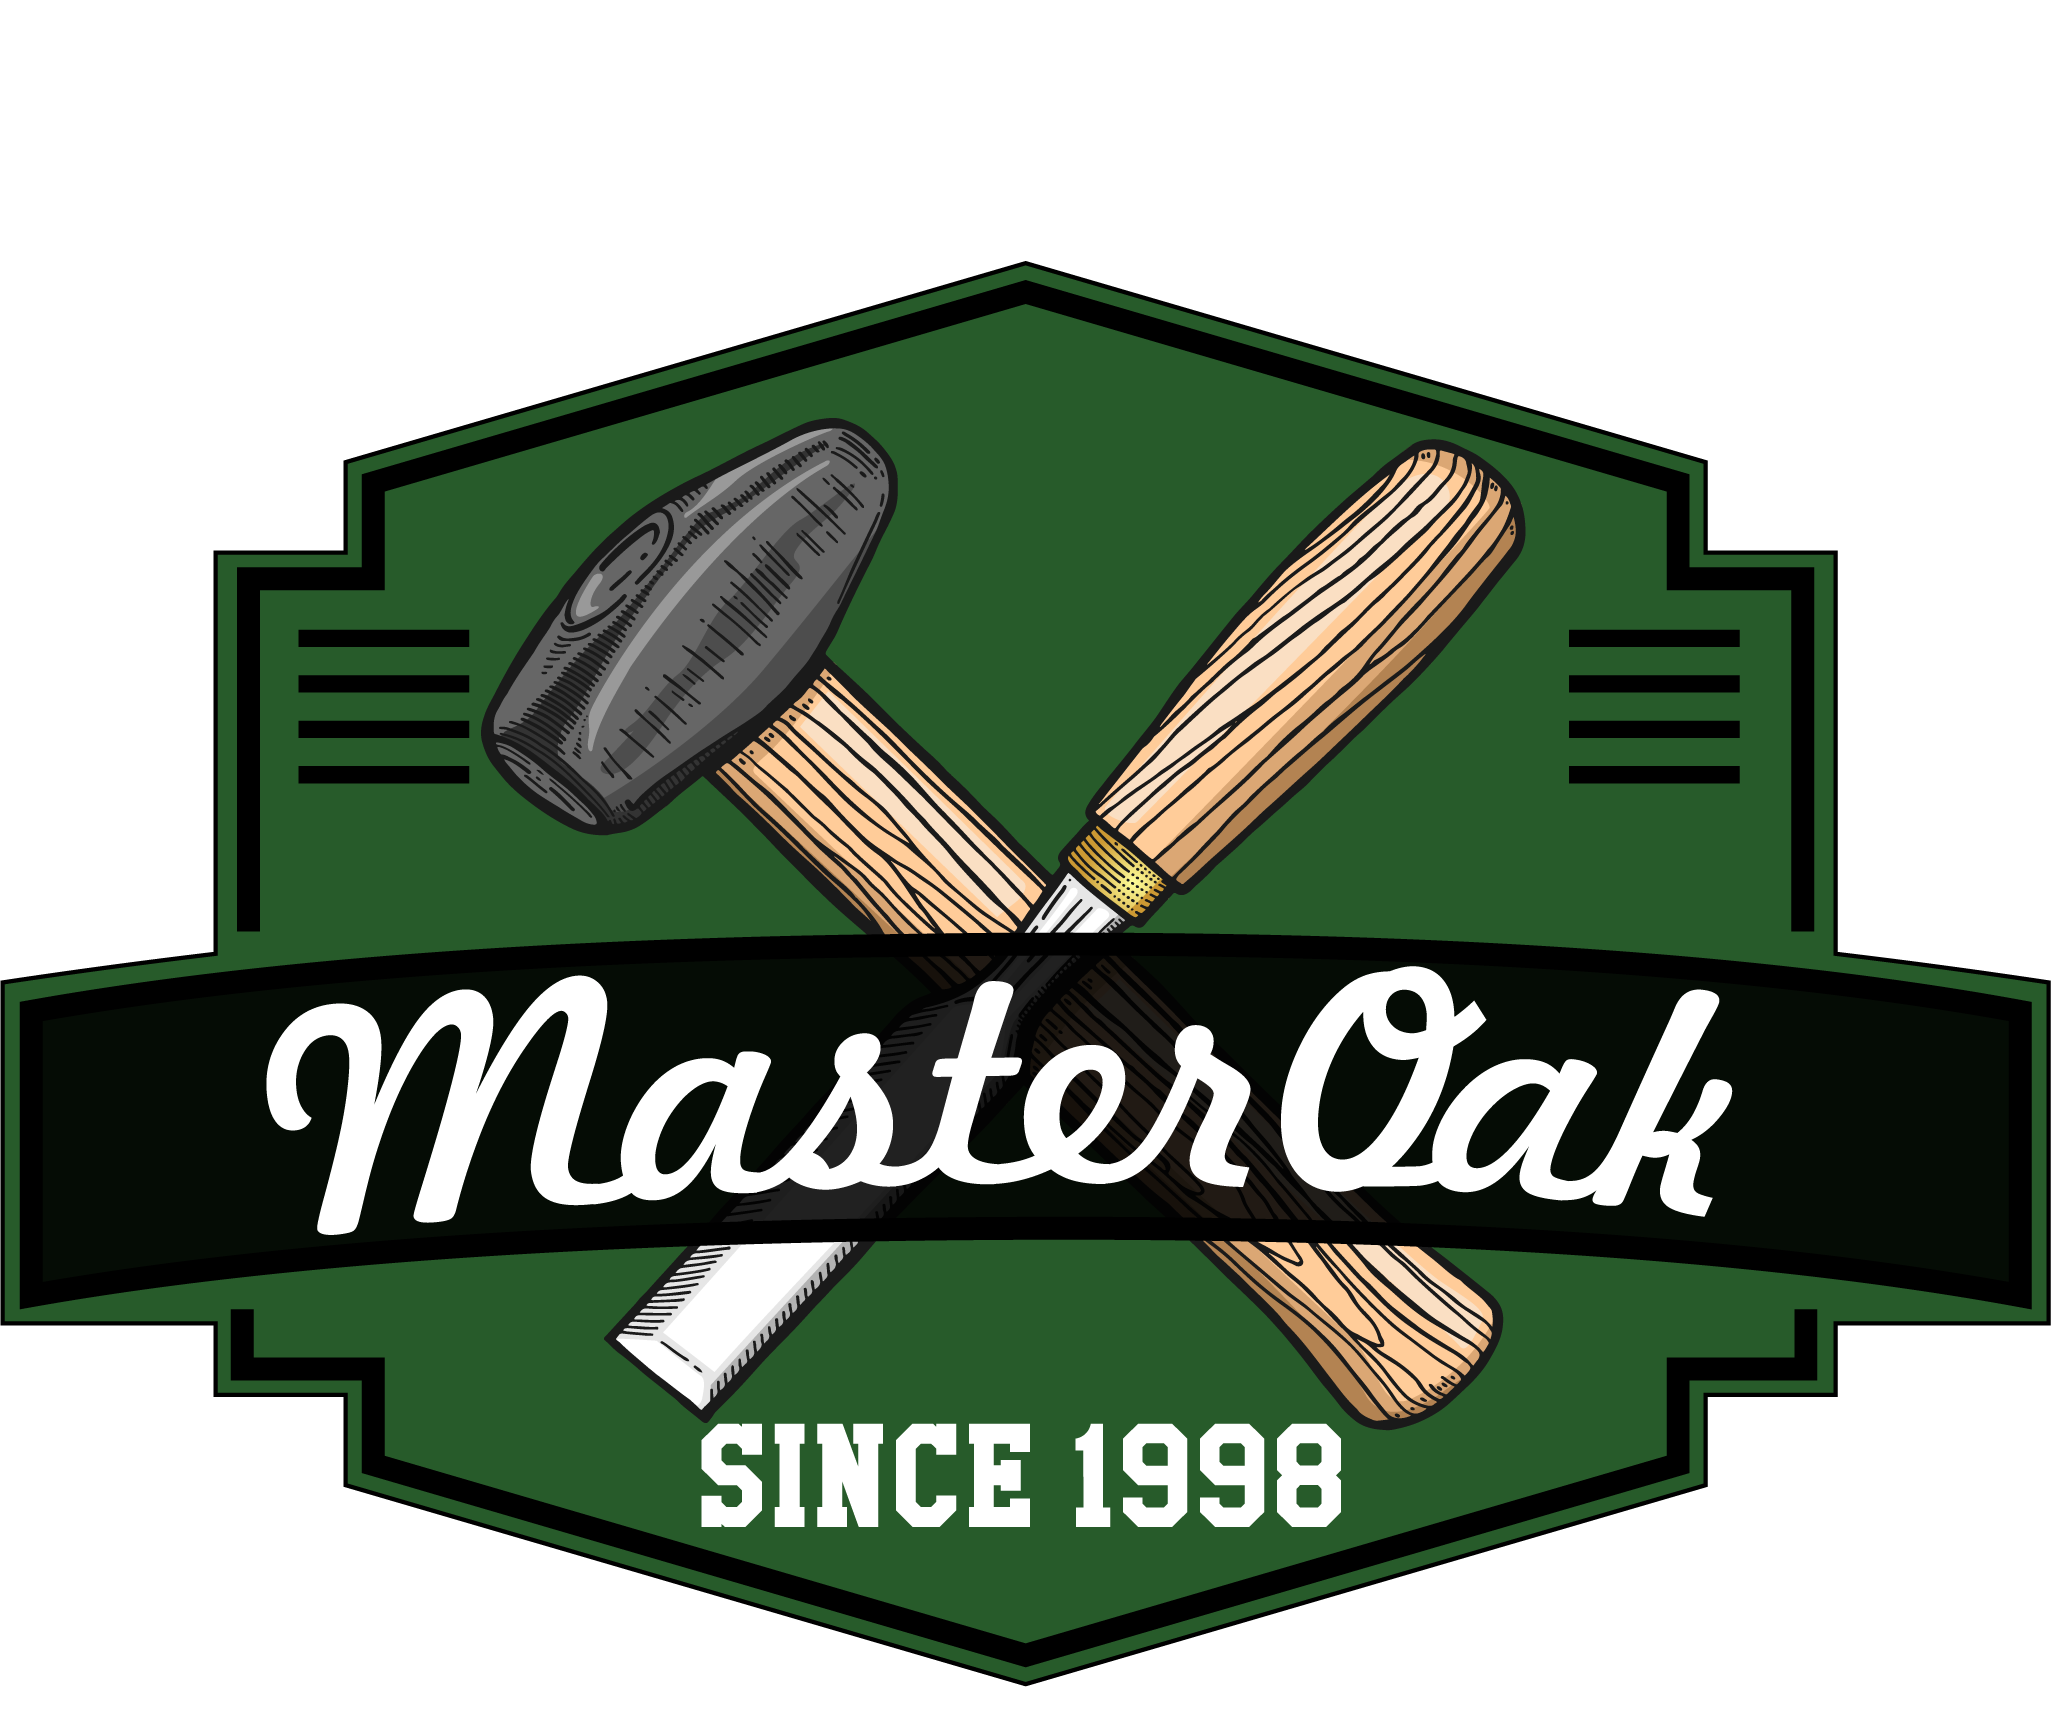 (c) Masteroakco.com